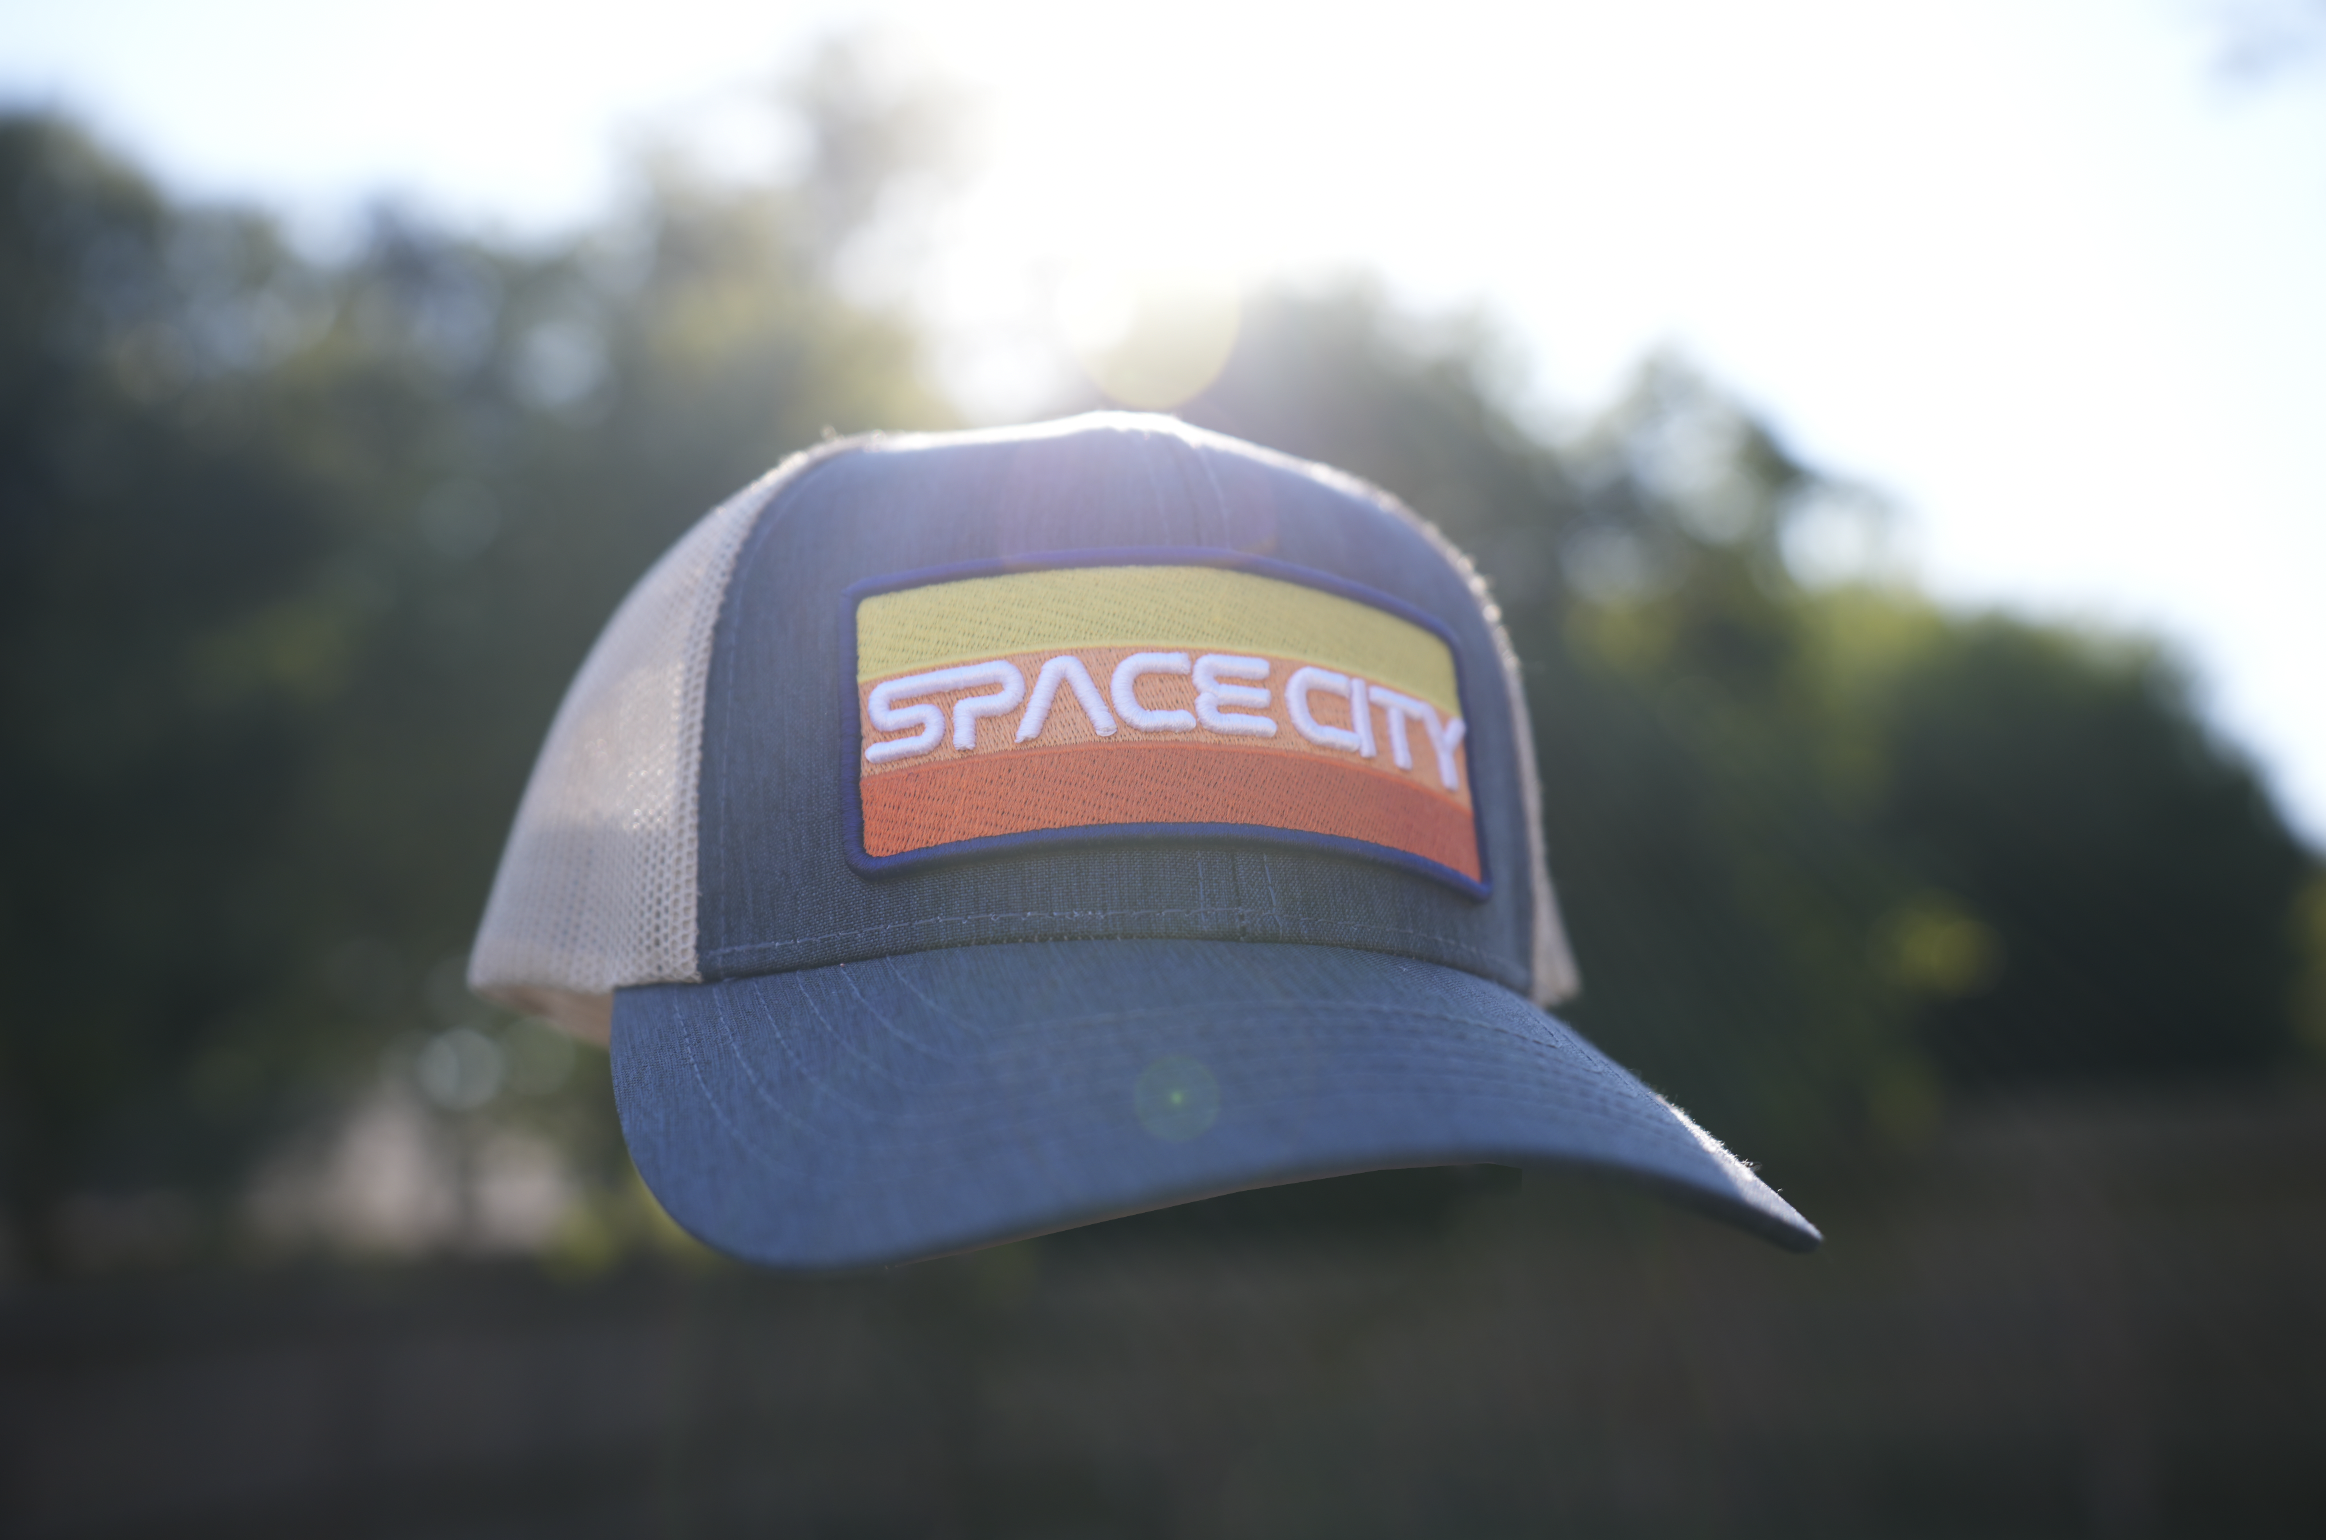 space city hat